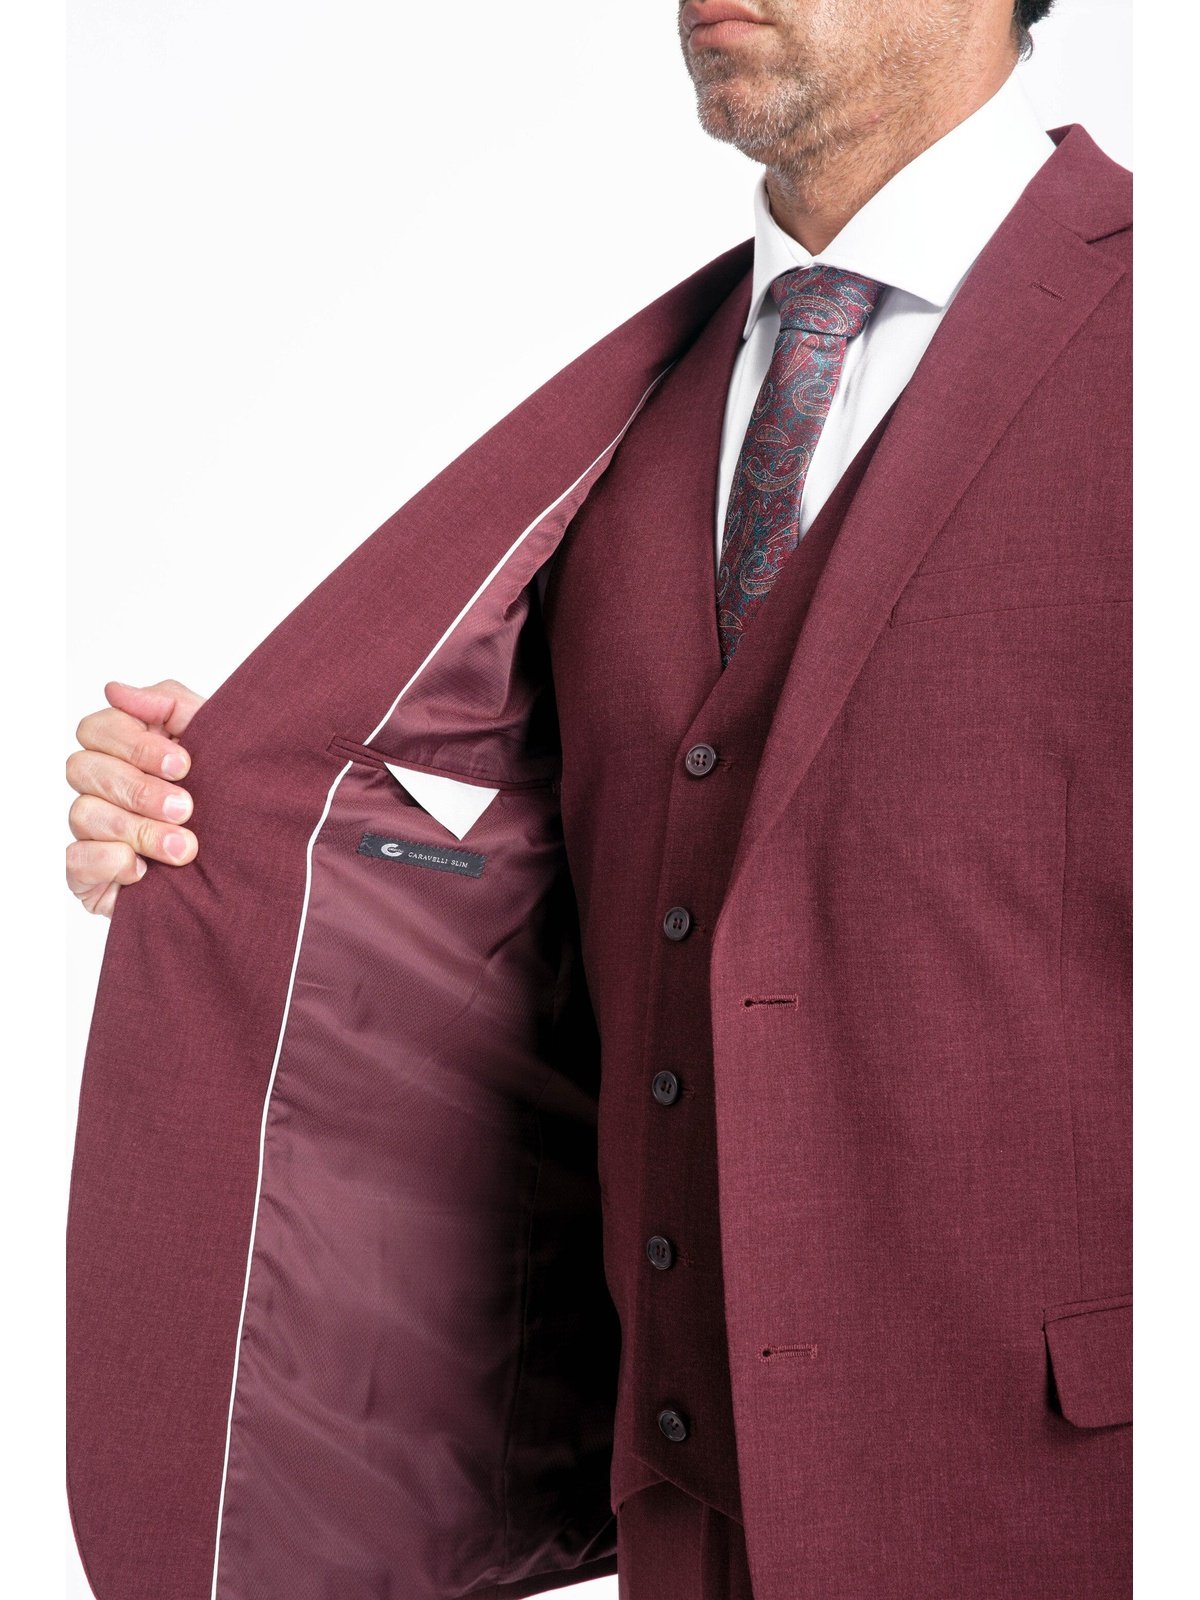 Caravelli Caravelli Mens Burgundy Slim Fit 3 Piece Suit